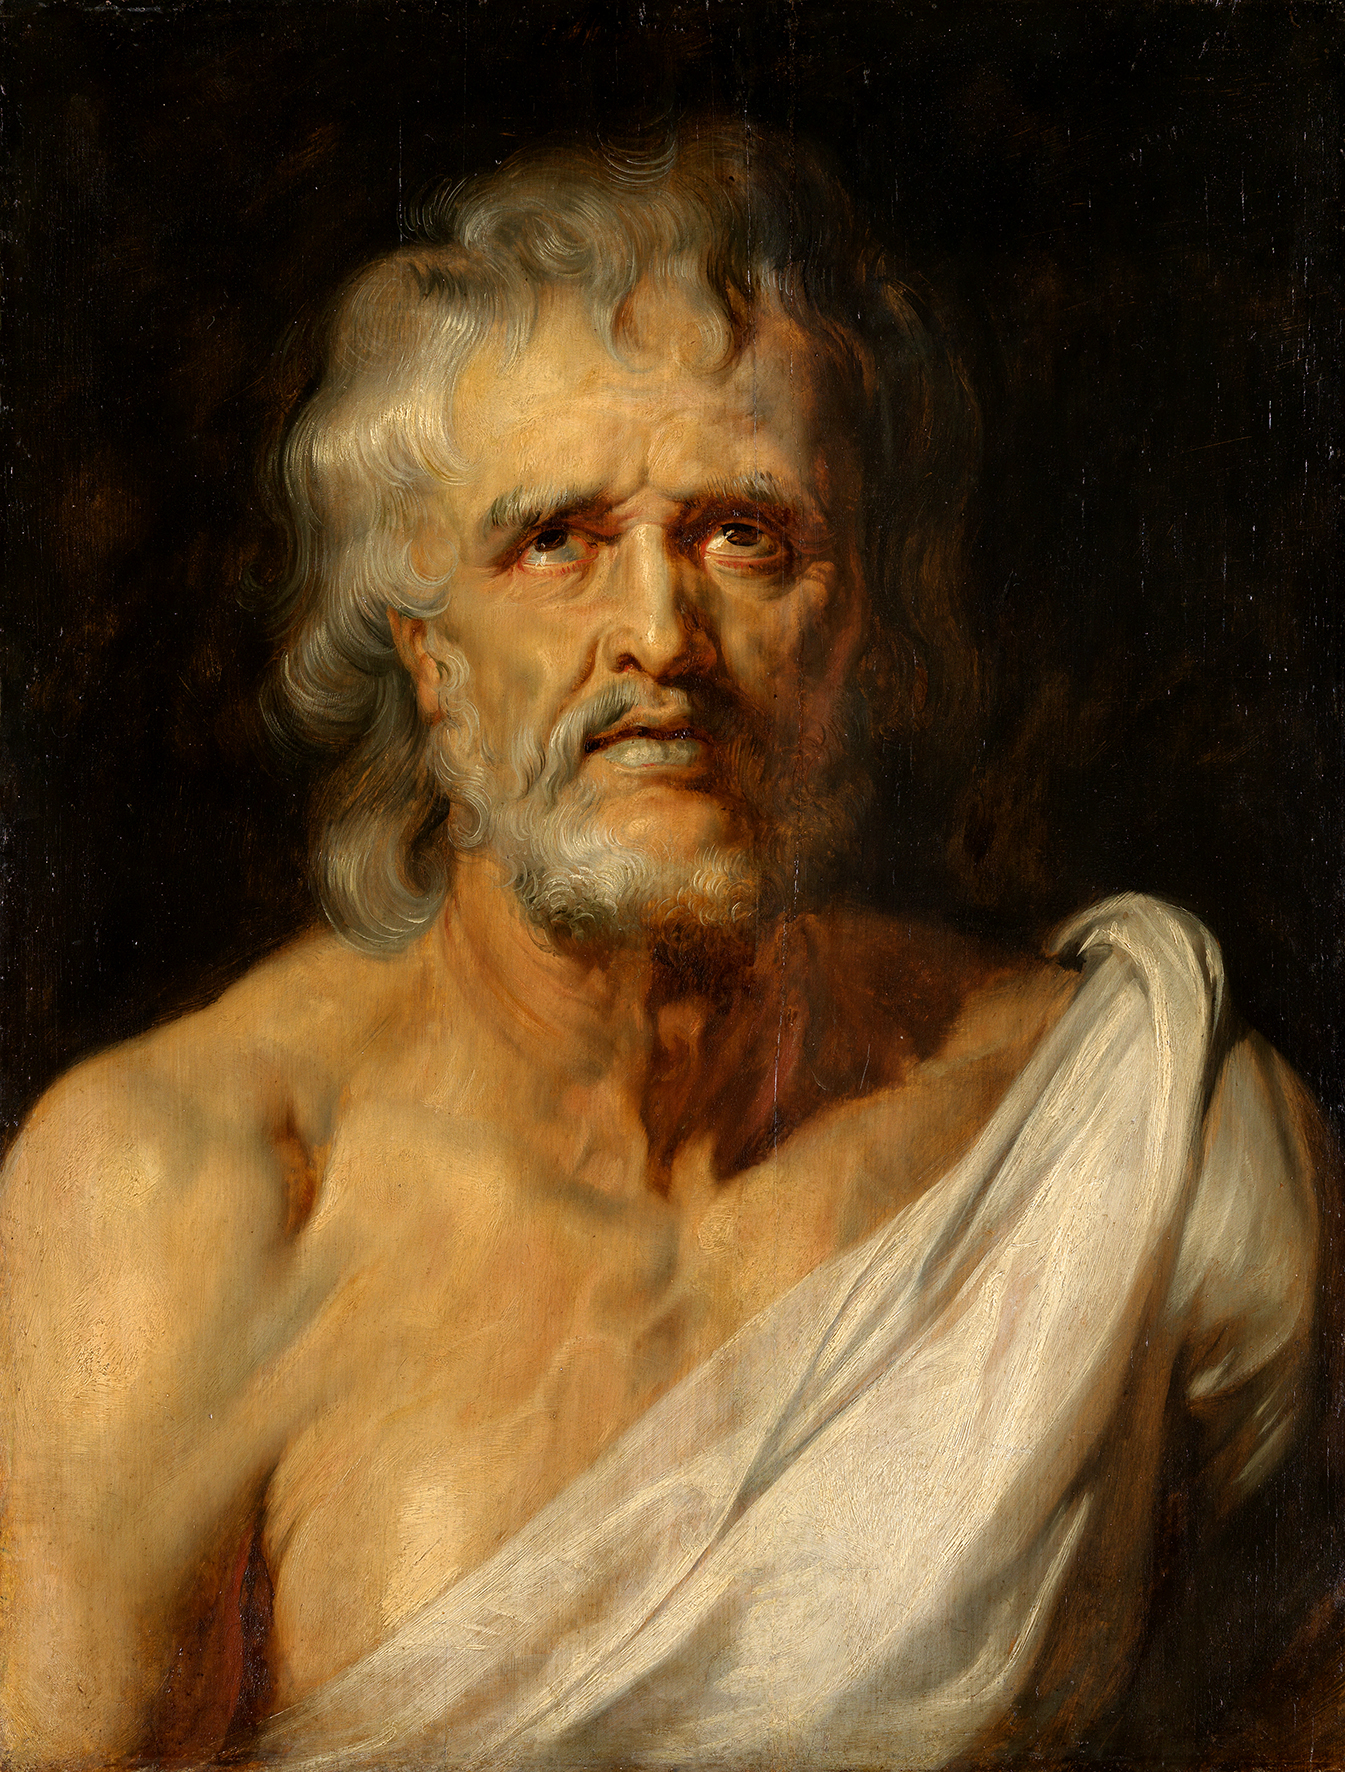 Gemälde Peter Paul Rubens: Brustbild des Philosophen Seneca (Der sterbende Seneca), um 1614/15